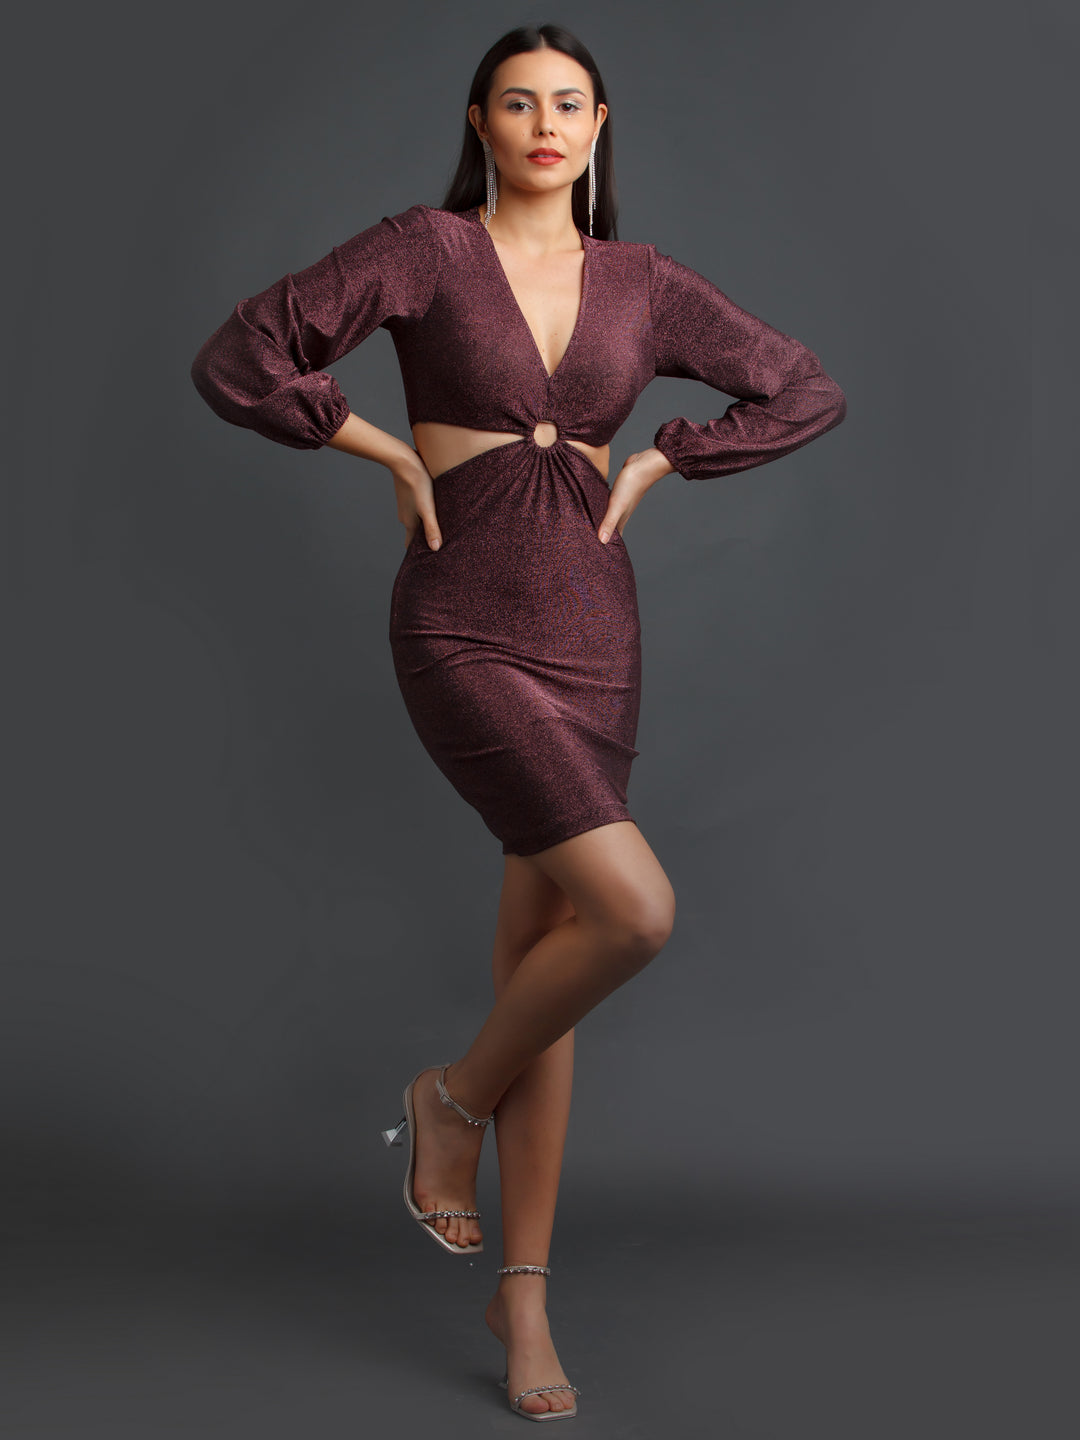 Buy iki chic Rust Metallic Shimmer Textured Bodycon Mini Dress at Amazon.in